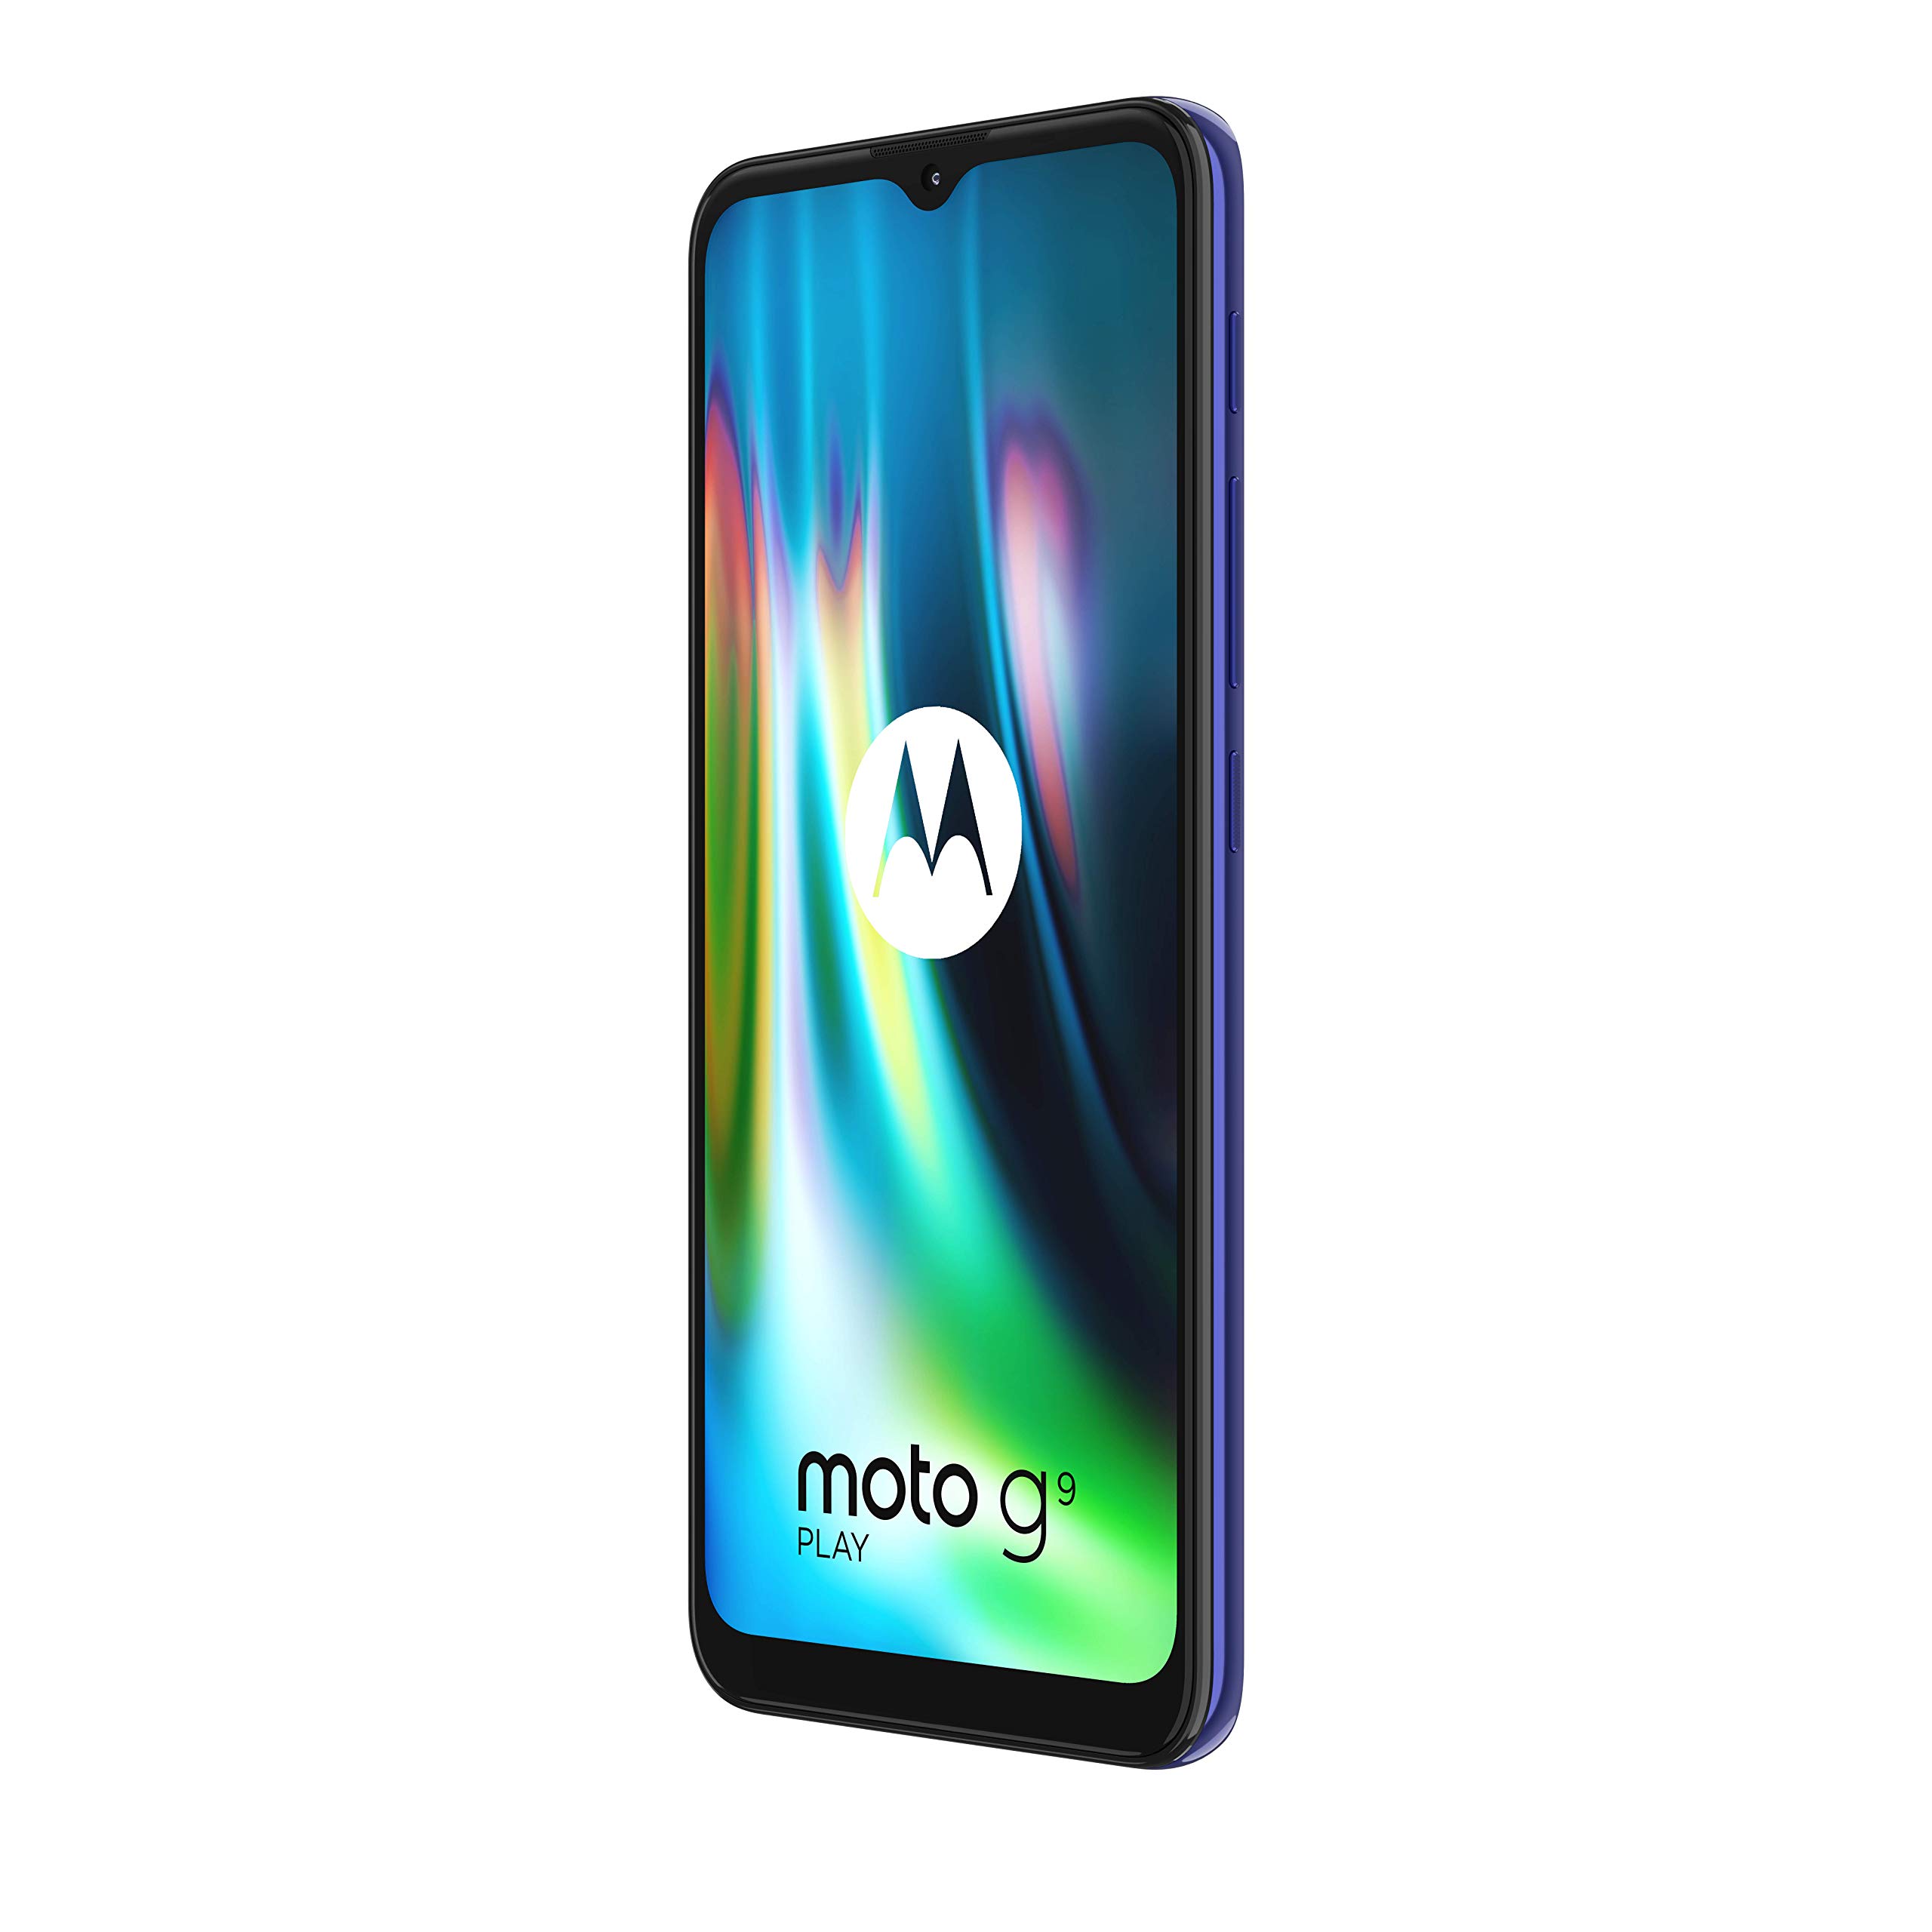 Motorola Moto G9 Play XT2083 Dual-SIM 64GB + 4GB RAM (GSM Only | No CDMA) Factory Unlocked 4G/LTE Smartphone (Sapphire Blue) - International Version